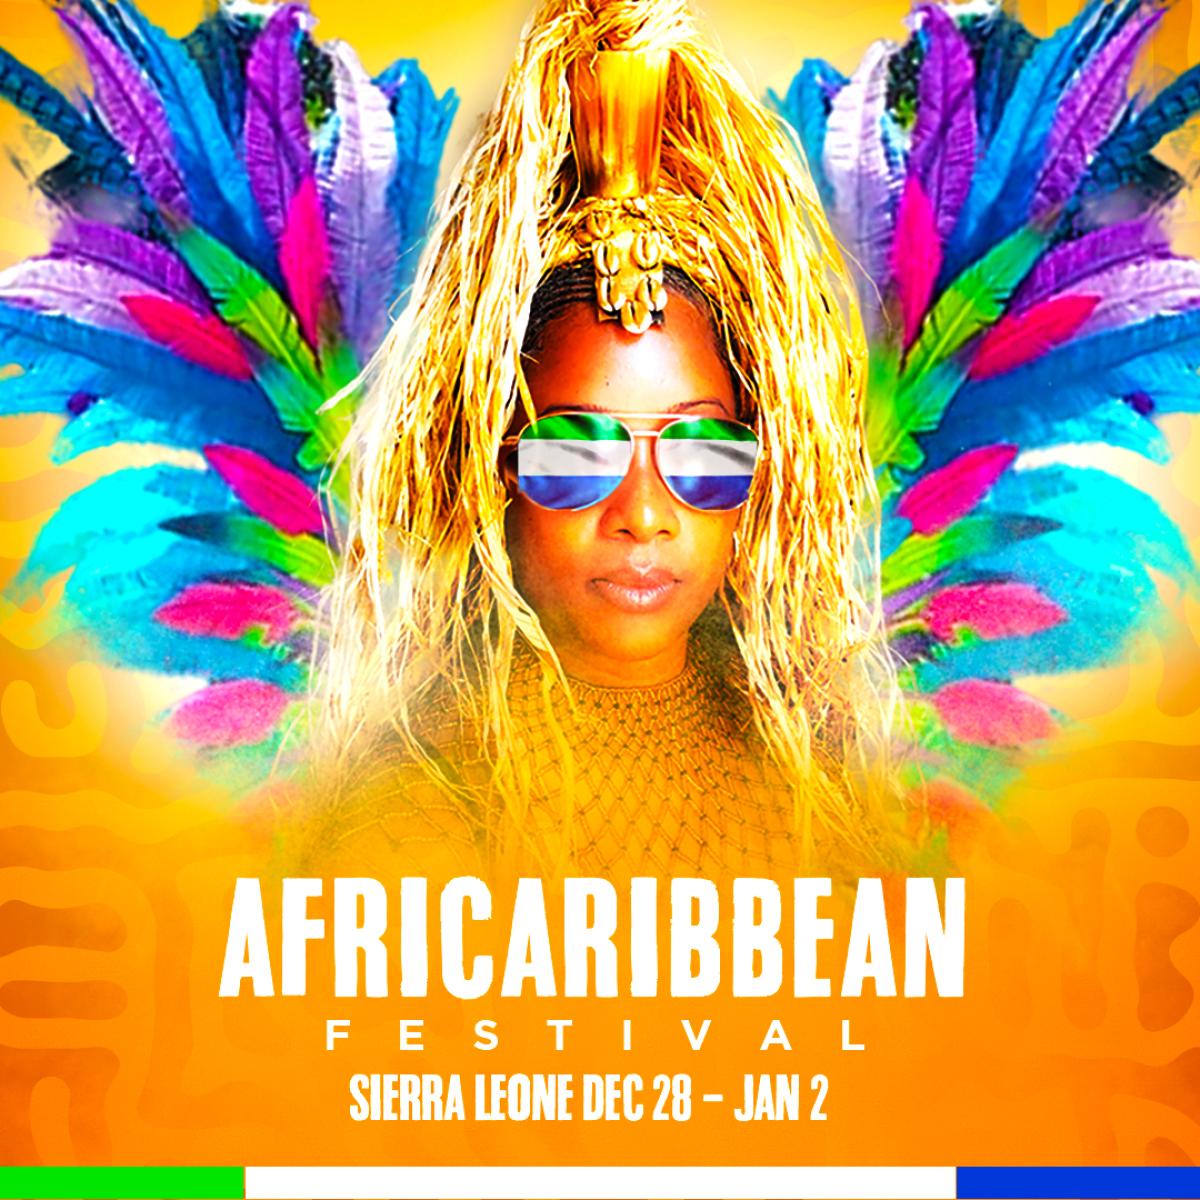 AfriCaribbean Festival flyer or graphic.